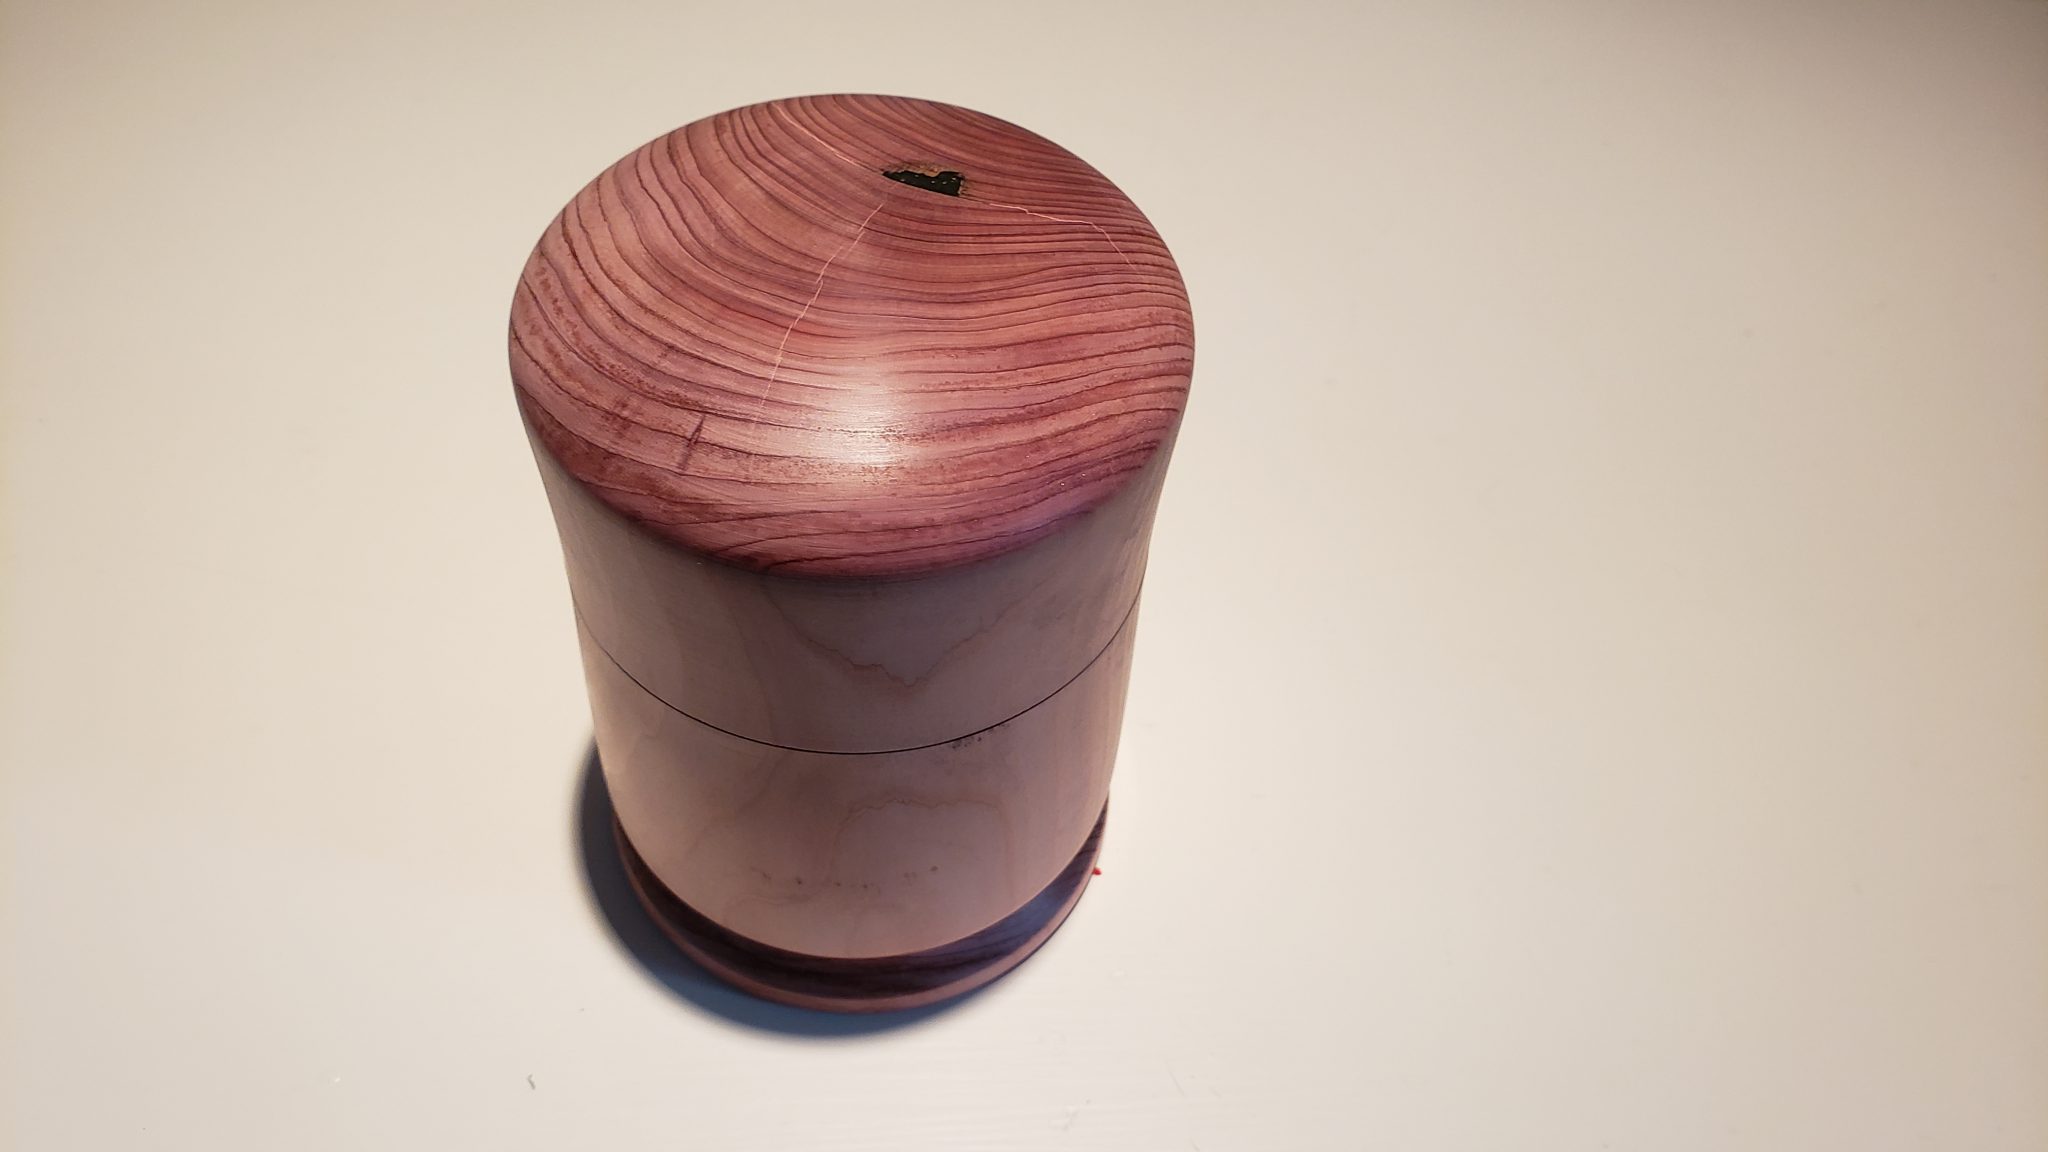 A cedar box, no finish, and a walnut butcher block box with oil/wax finish